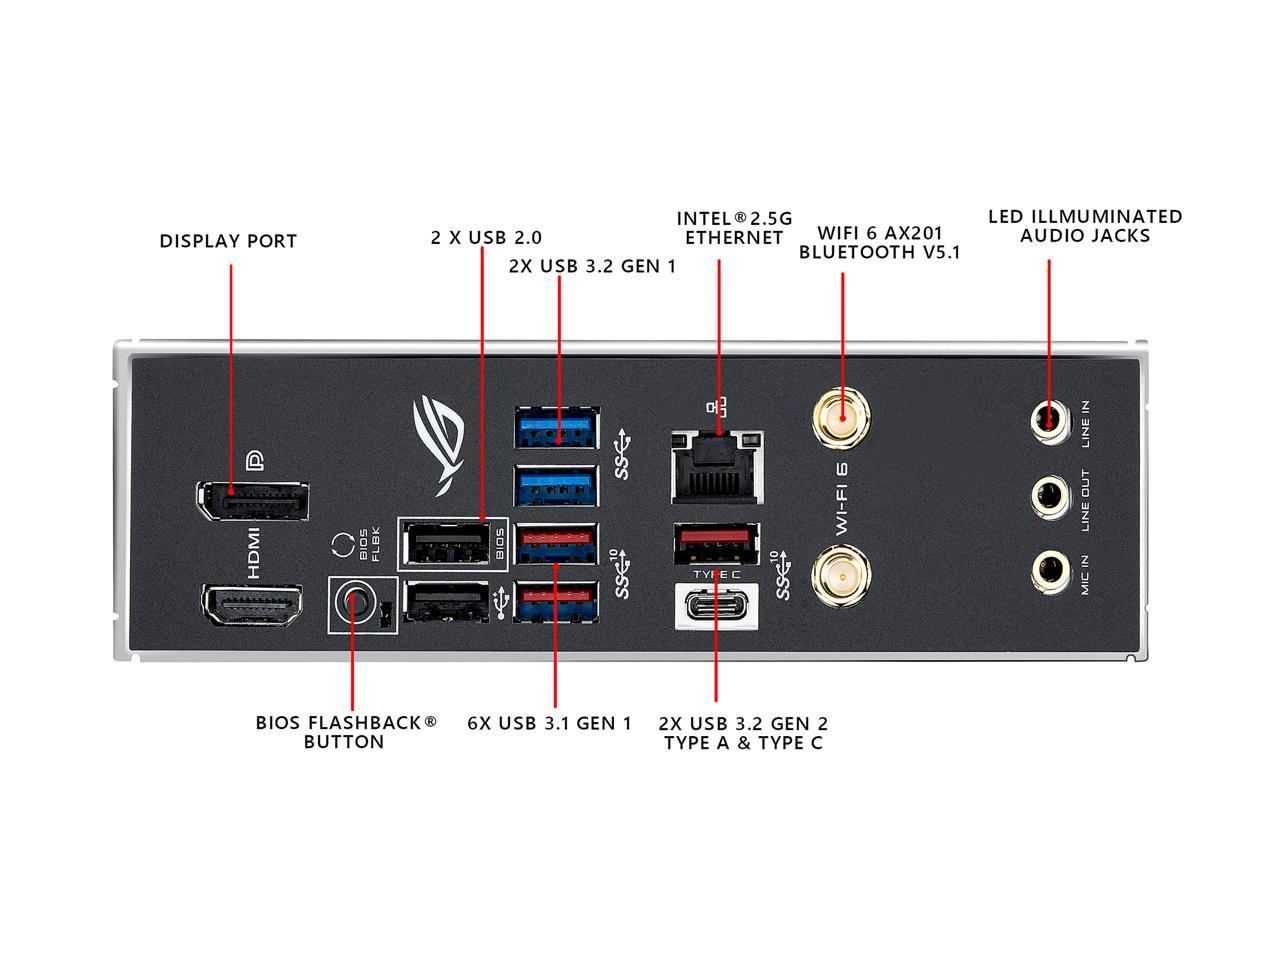 ASUS ROG STRIX Z490-I GAMING (WiFi 6) LGA 1200 (Intel 10th Gen) Intel Z490 SATA 6Gb/s Mini ITX Intel Motherboard (8+2 Power Stages, DDR4 4800, Intel 2.5Gb Ethernet, USB 3.2 Front Panel Type-C, HDMI 2.0a and AURA Sync)